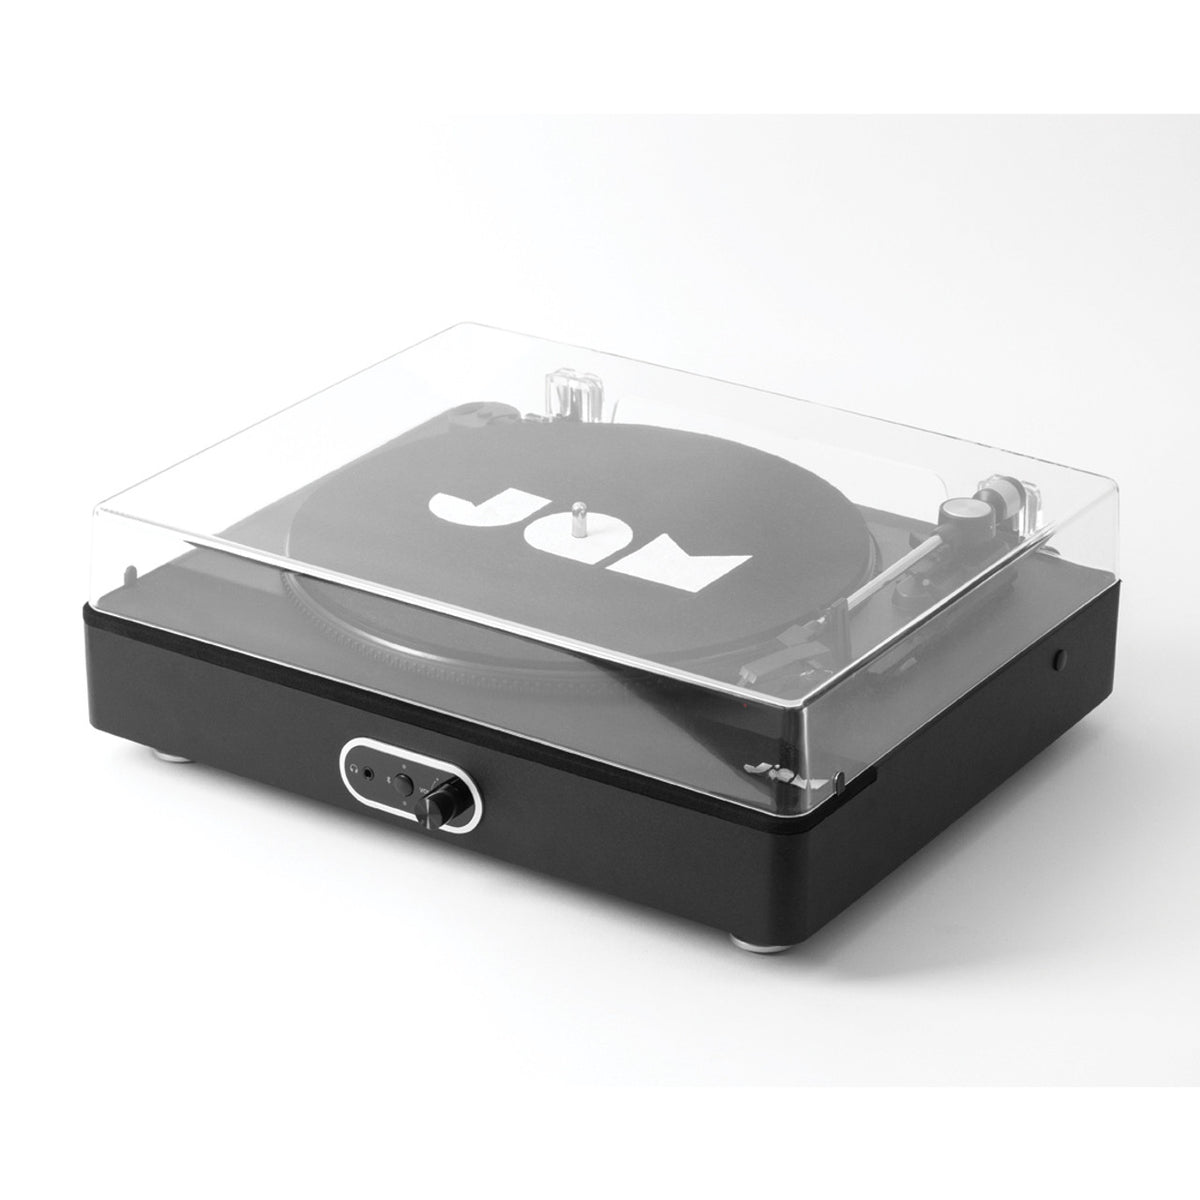 Jam Sound Stream+ Turntable Vinyl Bluetooth Speaker - Black | HX-TT700-BK-WW from Jam - DID Electrical